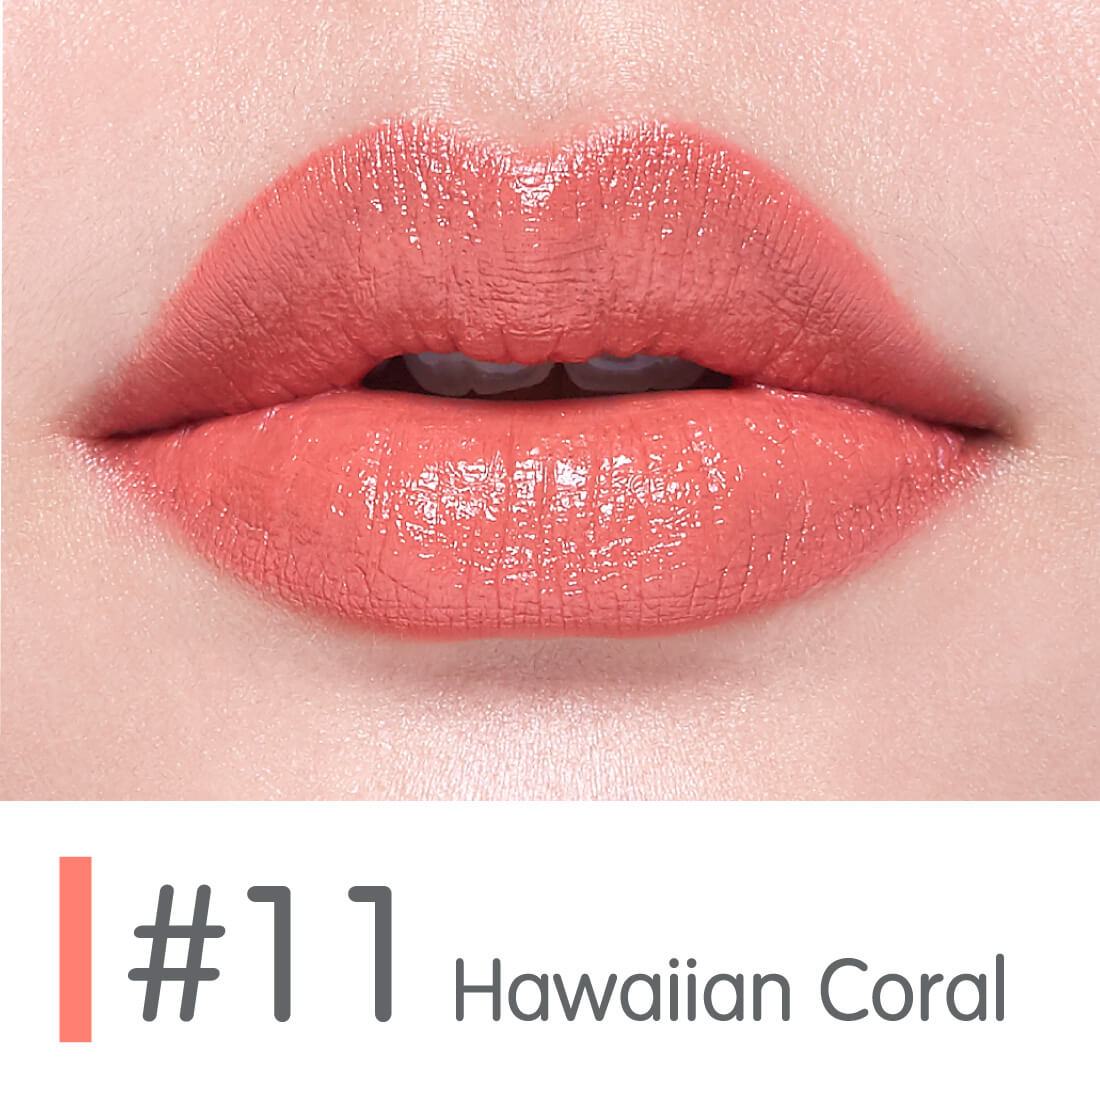 Cute Press,Goodbye Dry Lips Moisturizing Lip Cream,1 HawaiianCoral,ลิปสติกเนื้อครีม